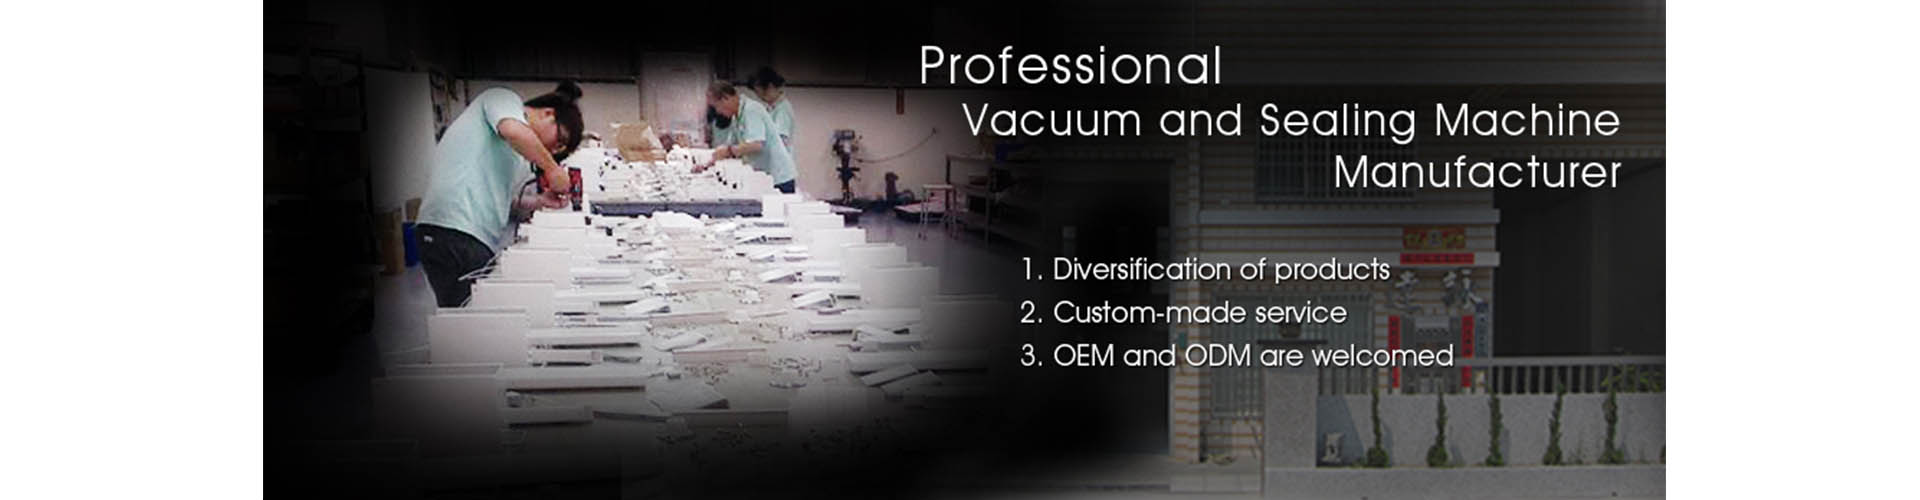 Professional Vacuum and Sealing Machine Manufacturer